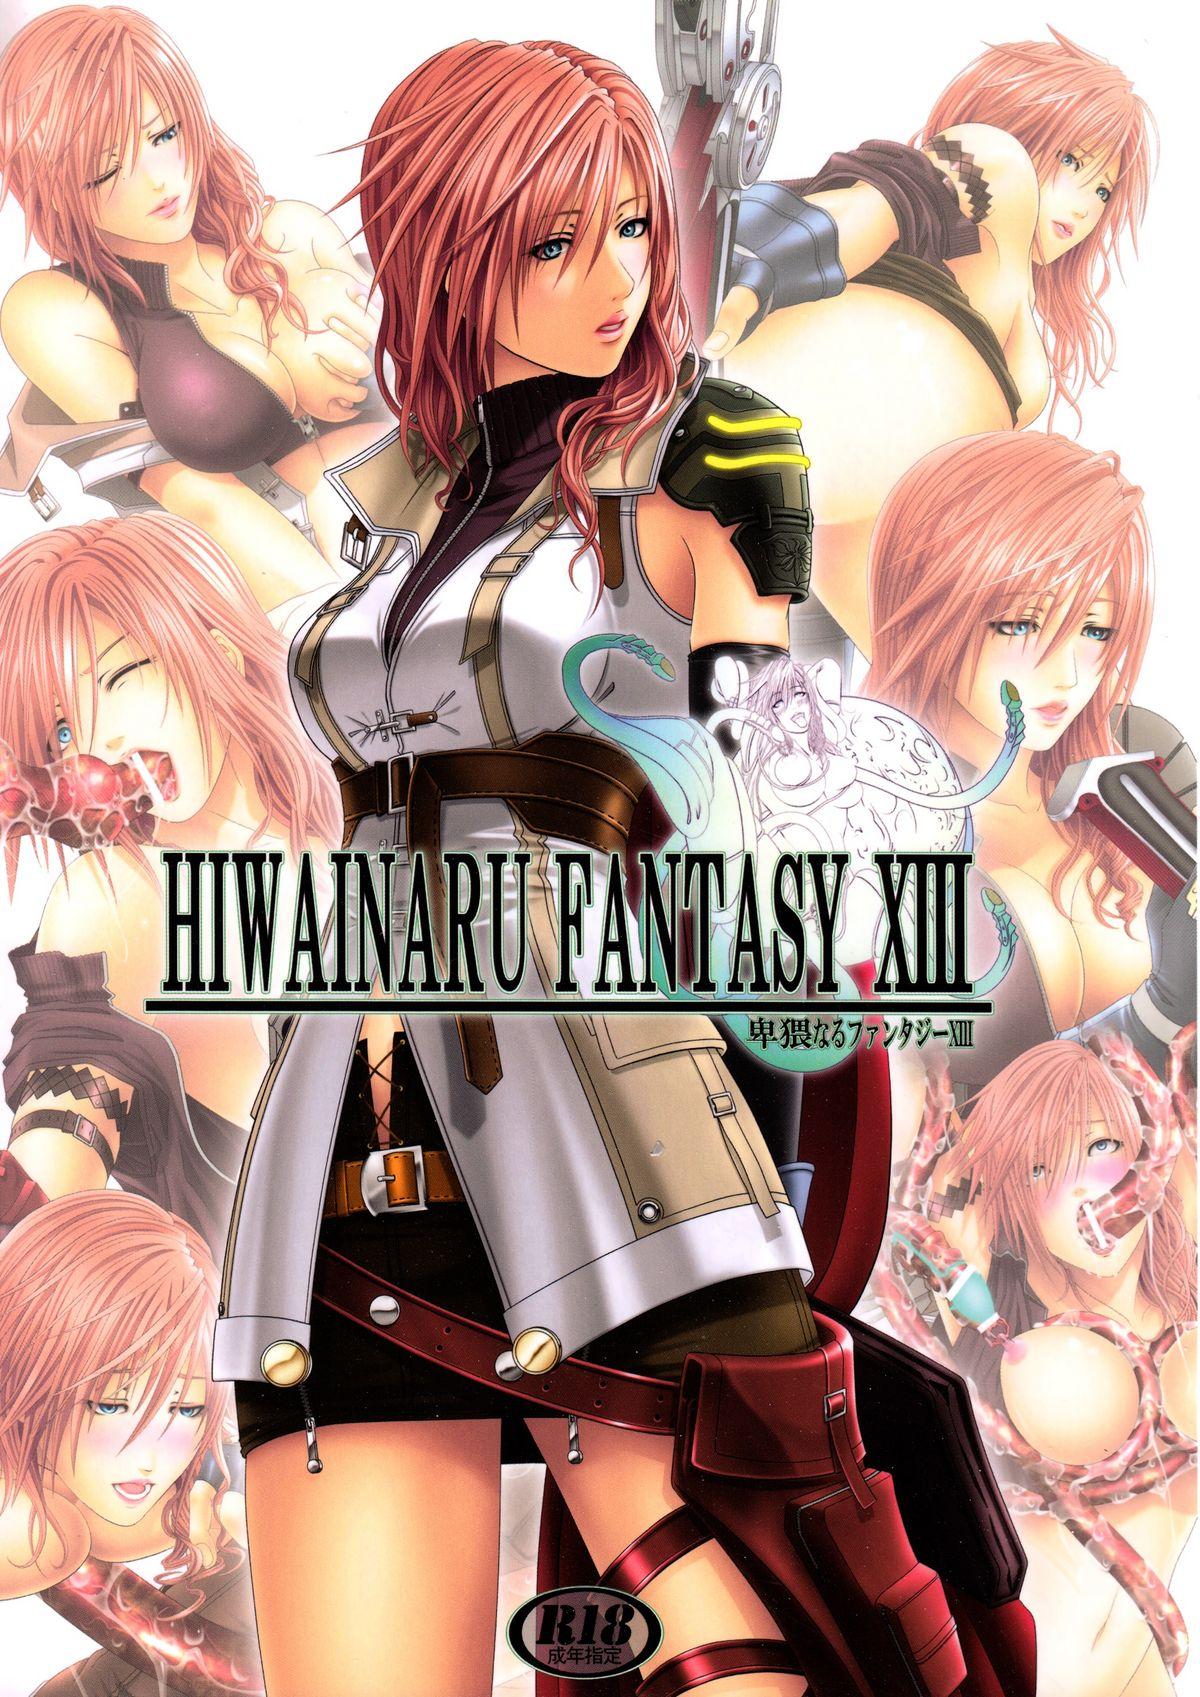 Cuckolding HIWAINARU FANTASY XIII - Final fantasy xiii Harcore - Picture 1